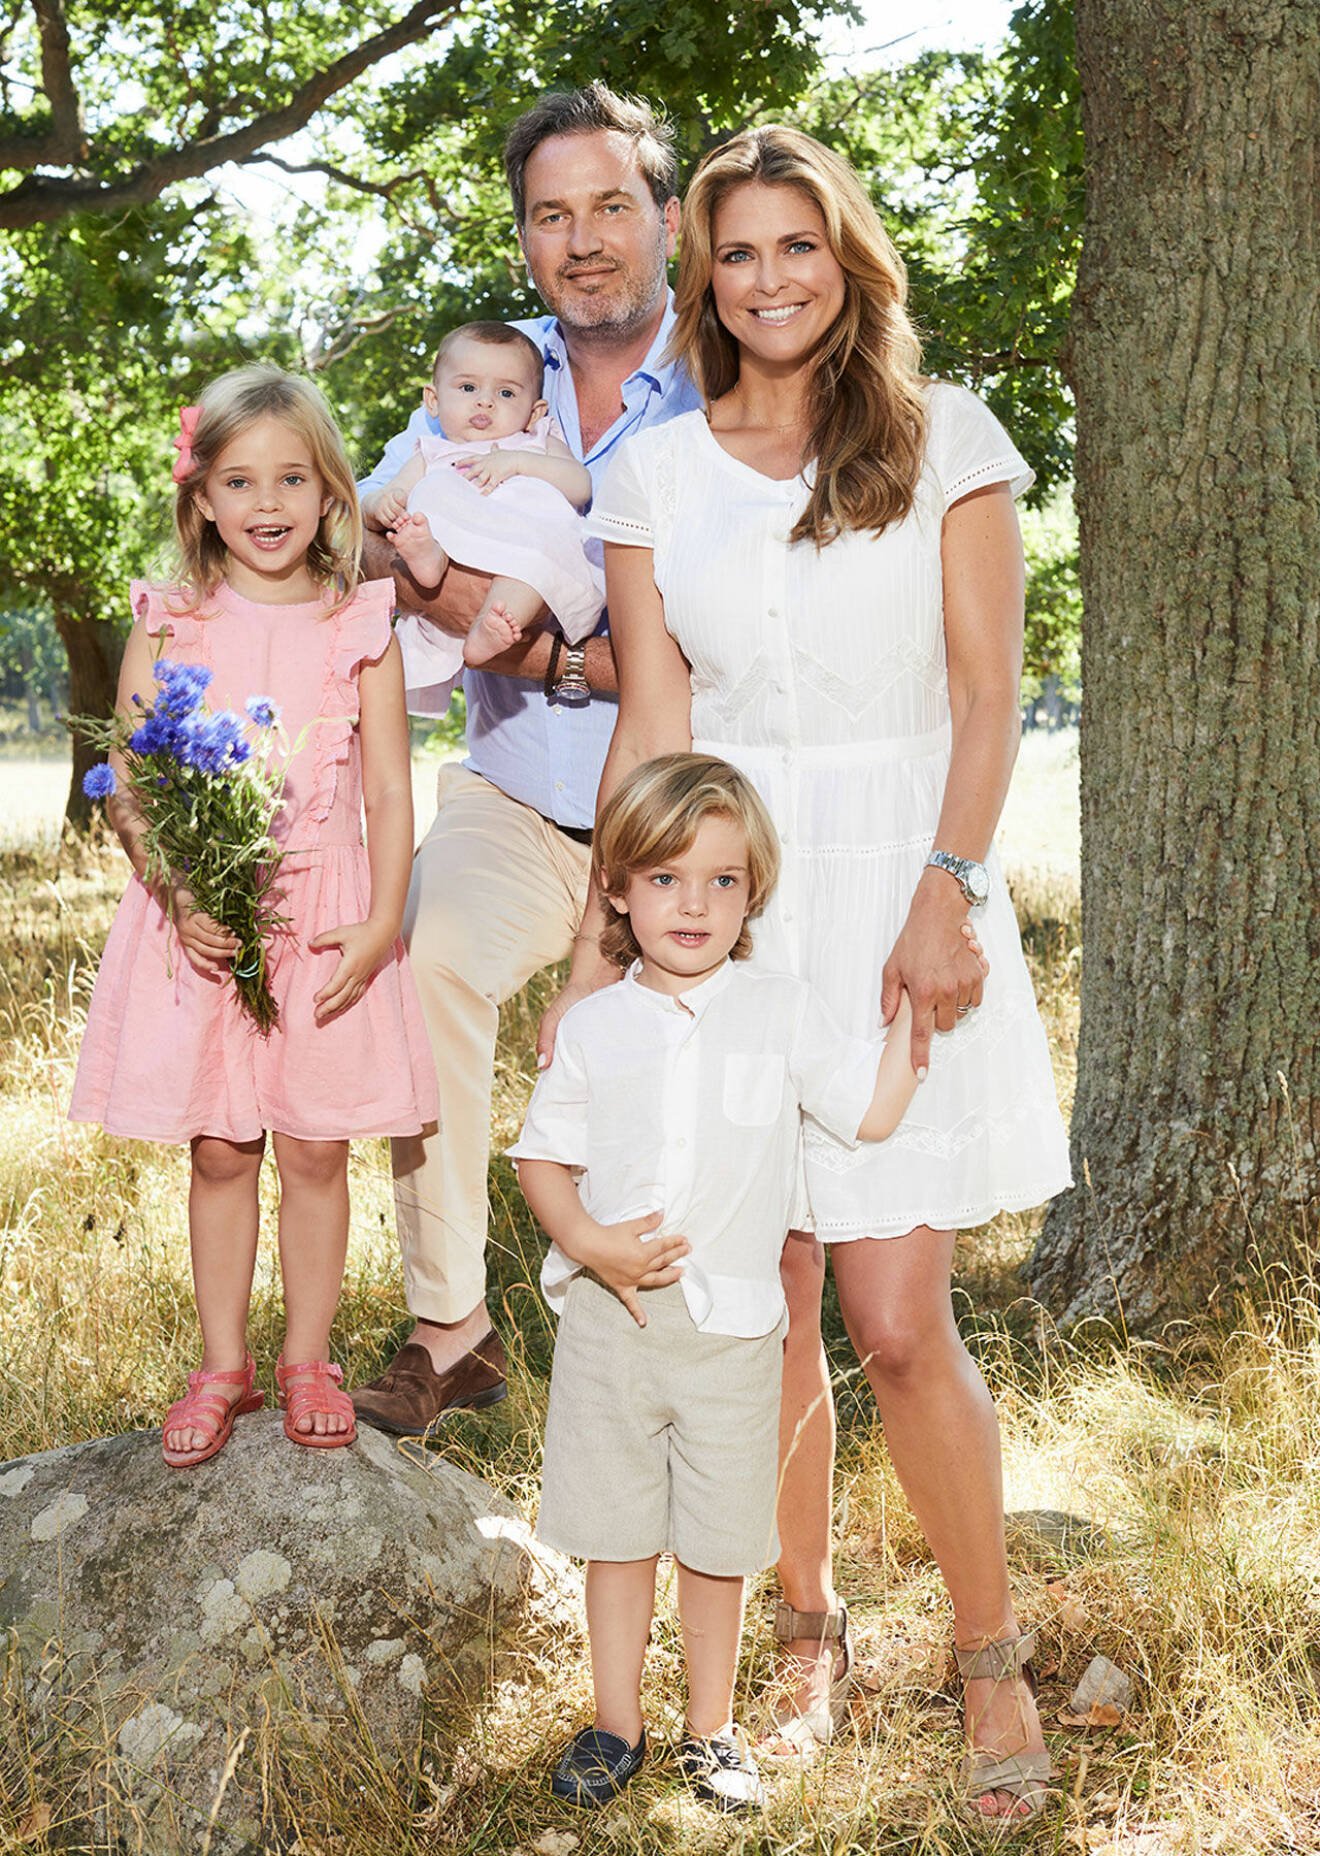 Prinsessan Madeleine och Chris O’Neill med barnen prinsessan Adrienne, prins Nicolas och prinsessan Leonore.